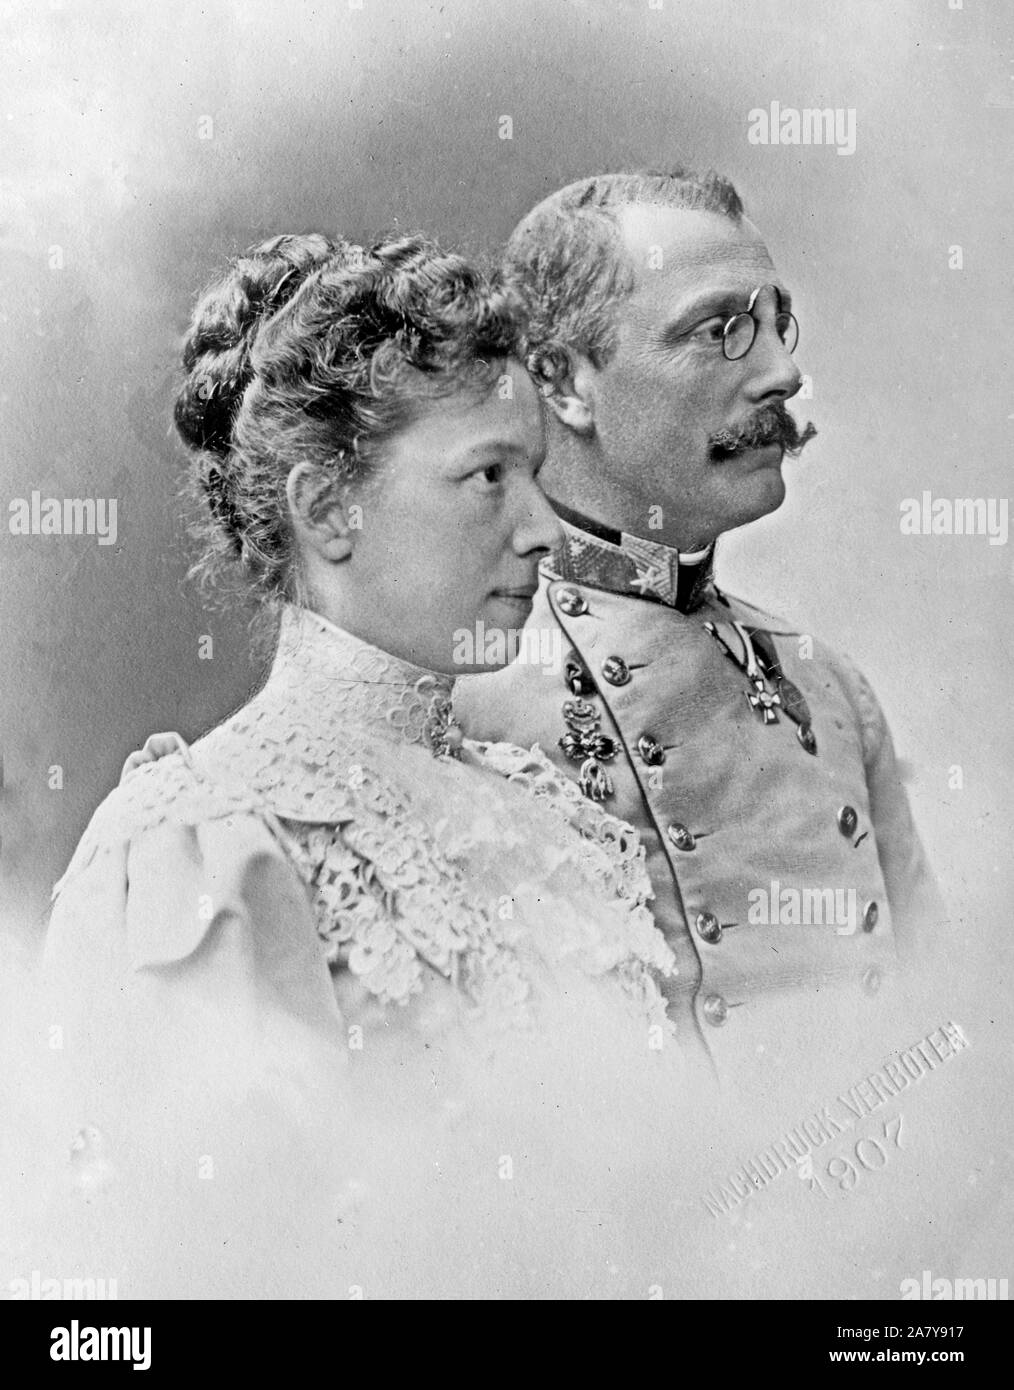 Arciduca Franz Salvator dell Austria e Marie Valerie, Arciduchessa d'Austria Foto Stock